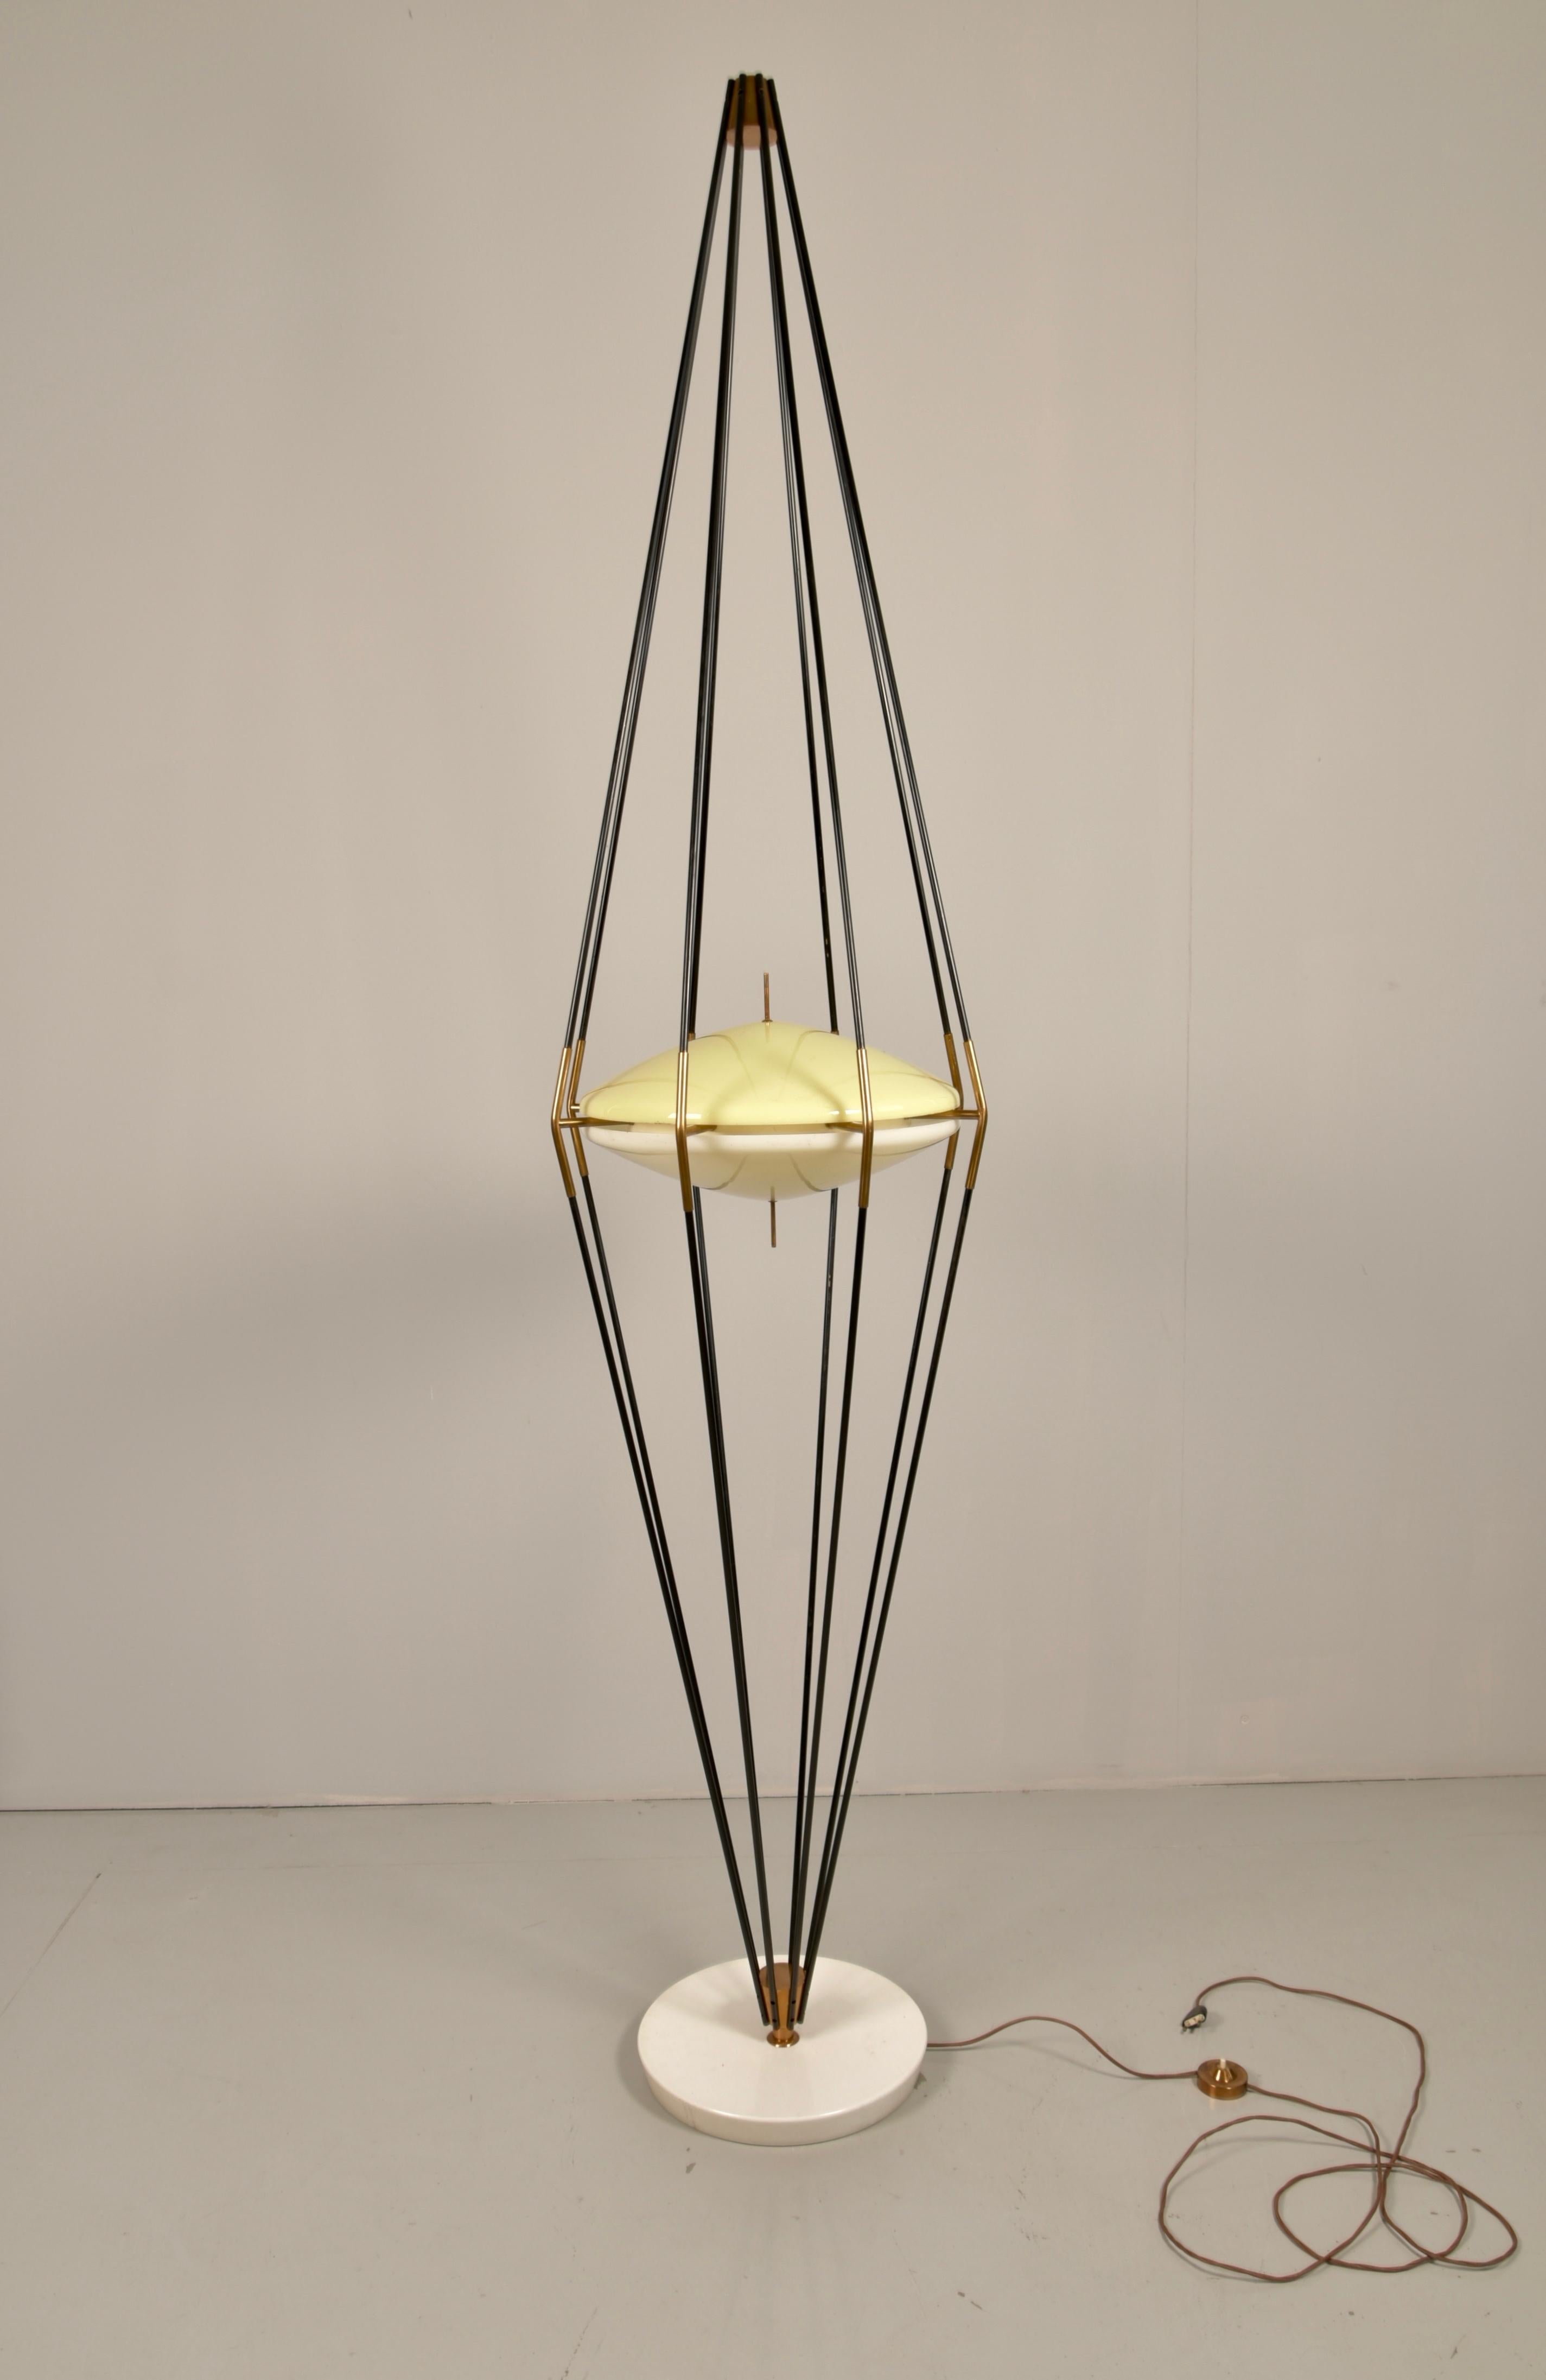 Model 12628 'Siluro' floor lamp by Angelo Lelli for Arredoluce, Italy, 1957.